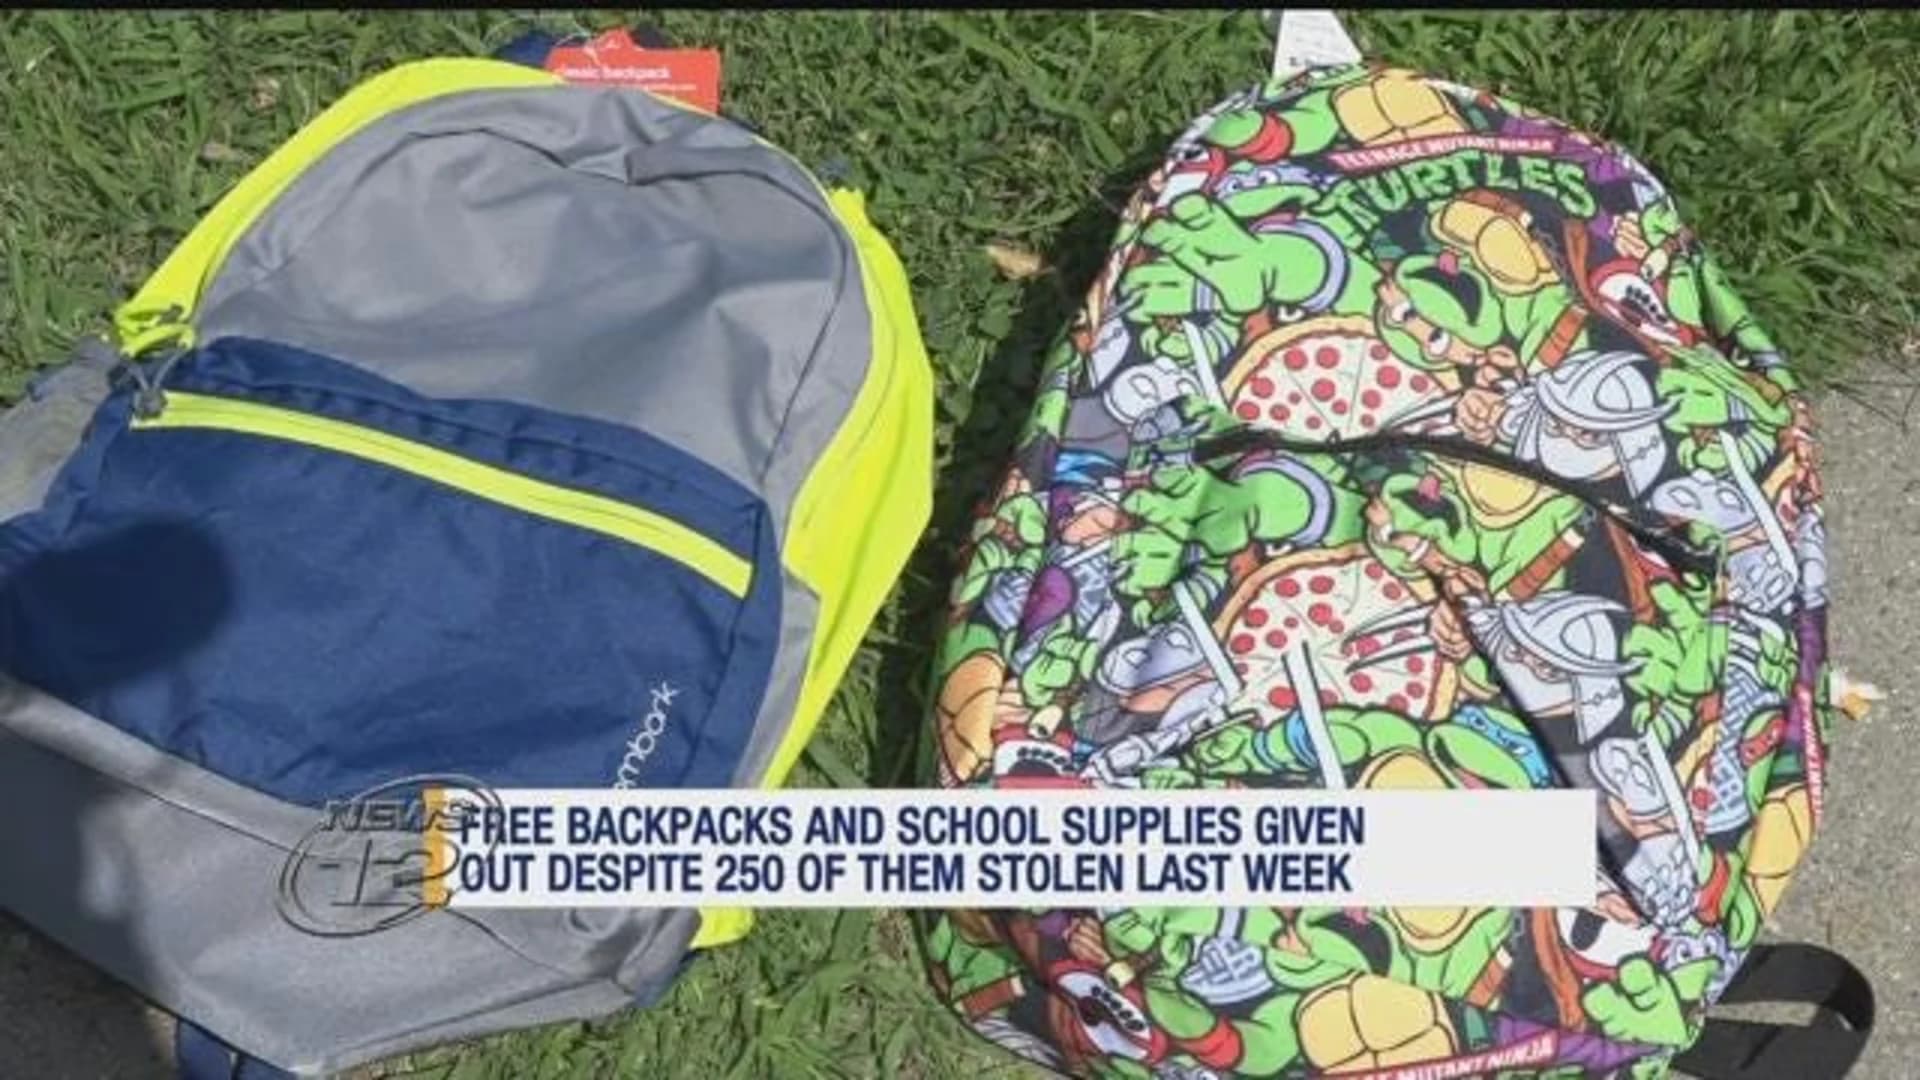 Free backpacks, school supplies given out despite 250 stolen last week